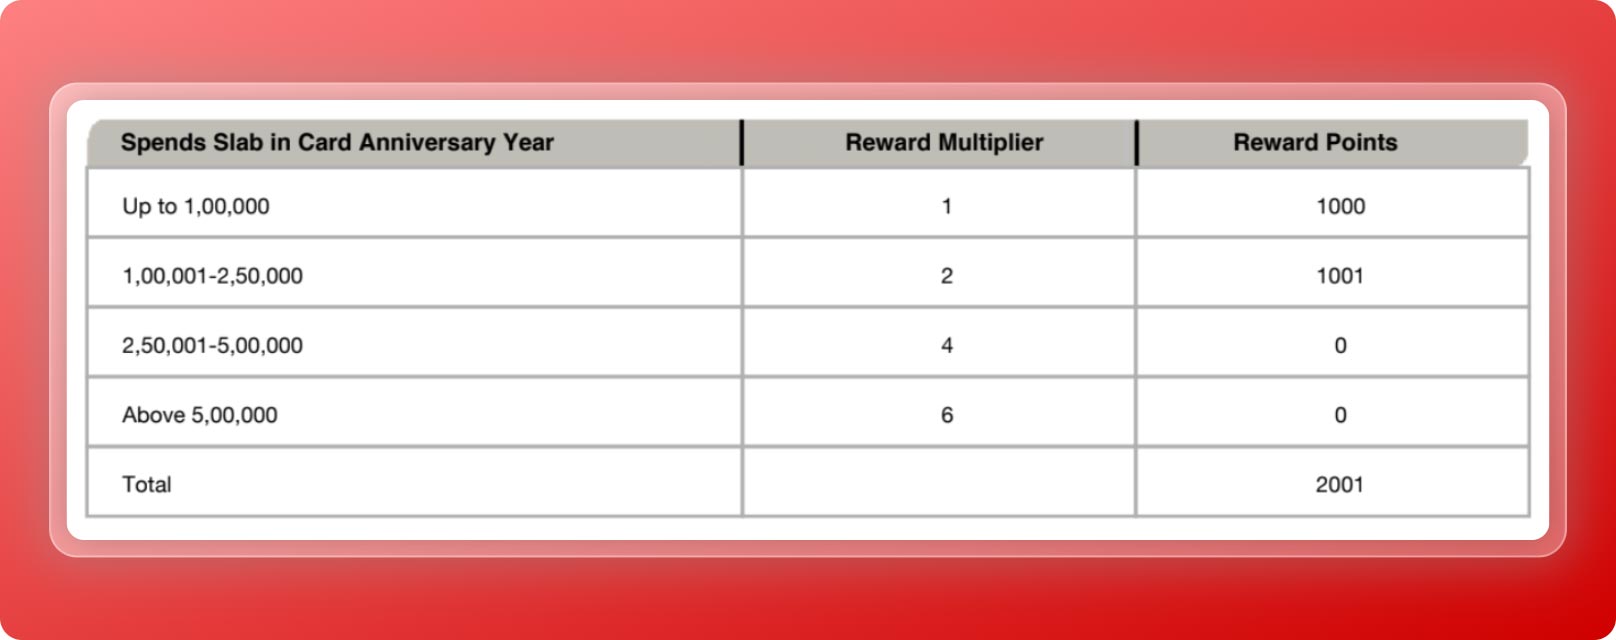 reward points earned - tiger card statement